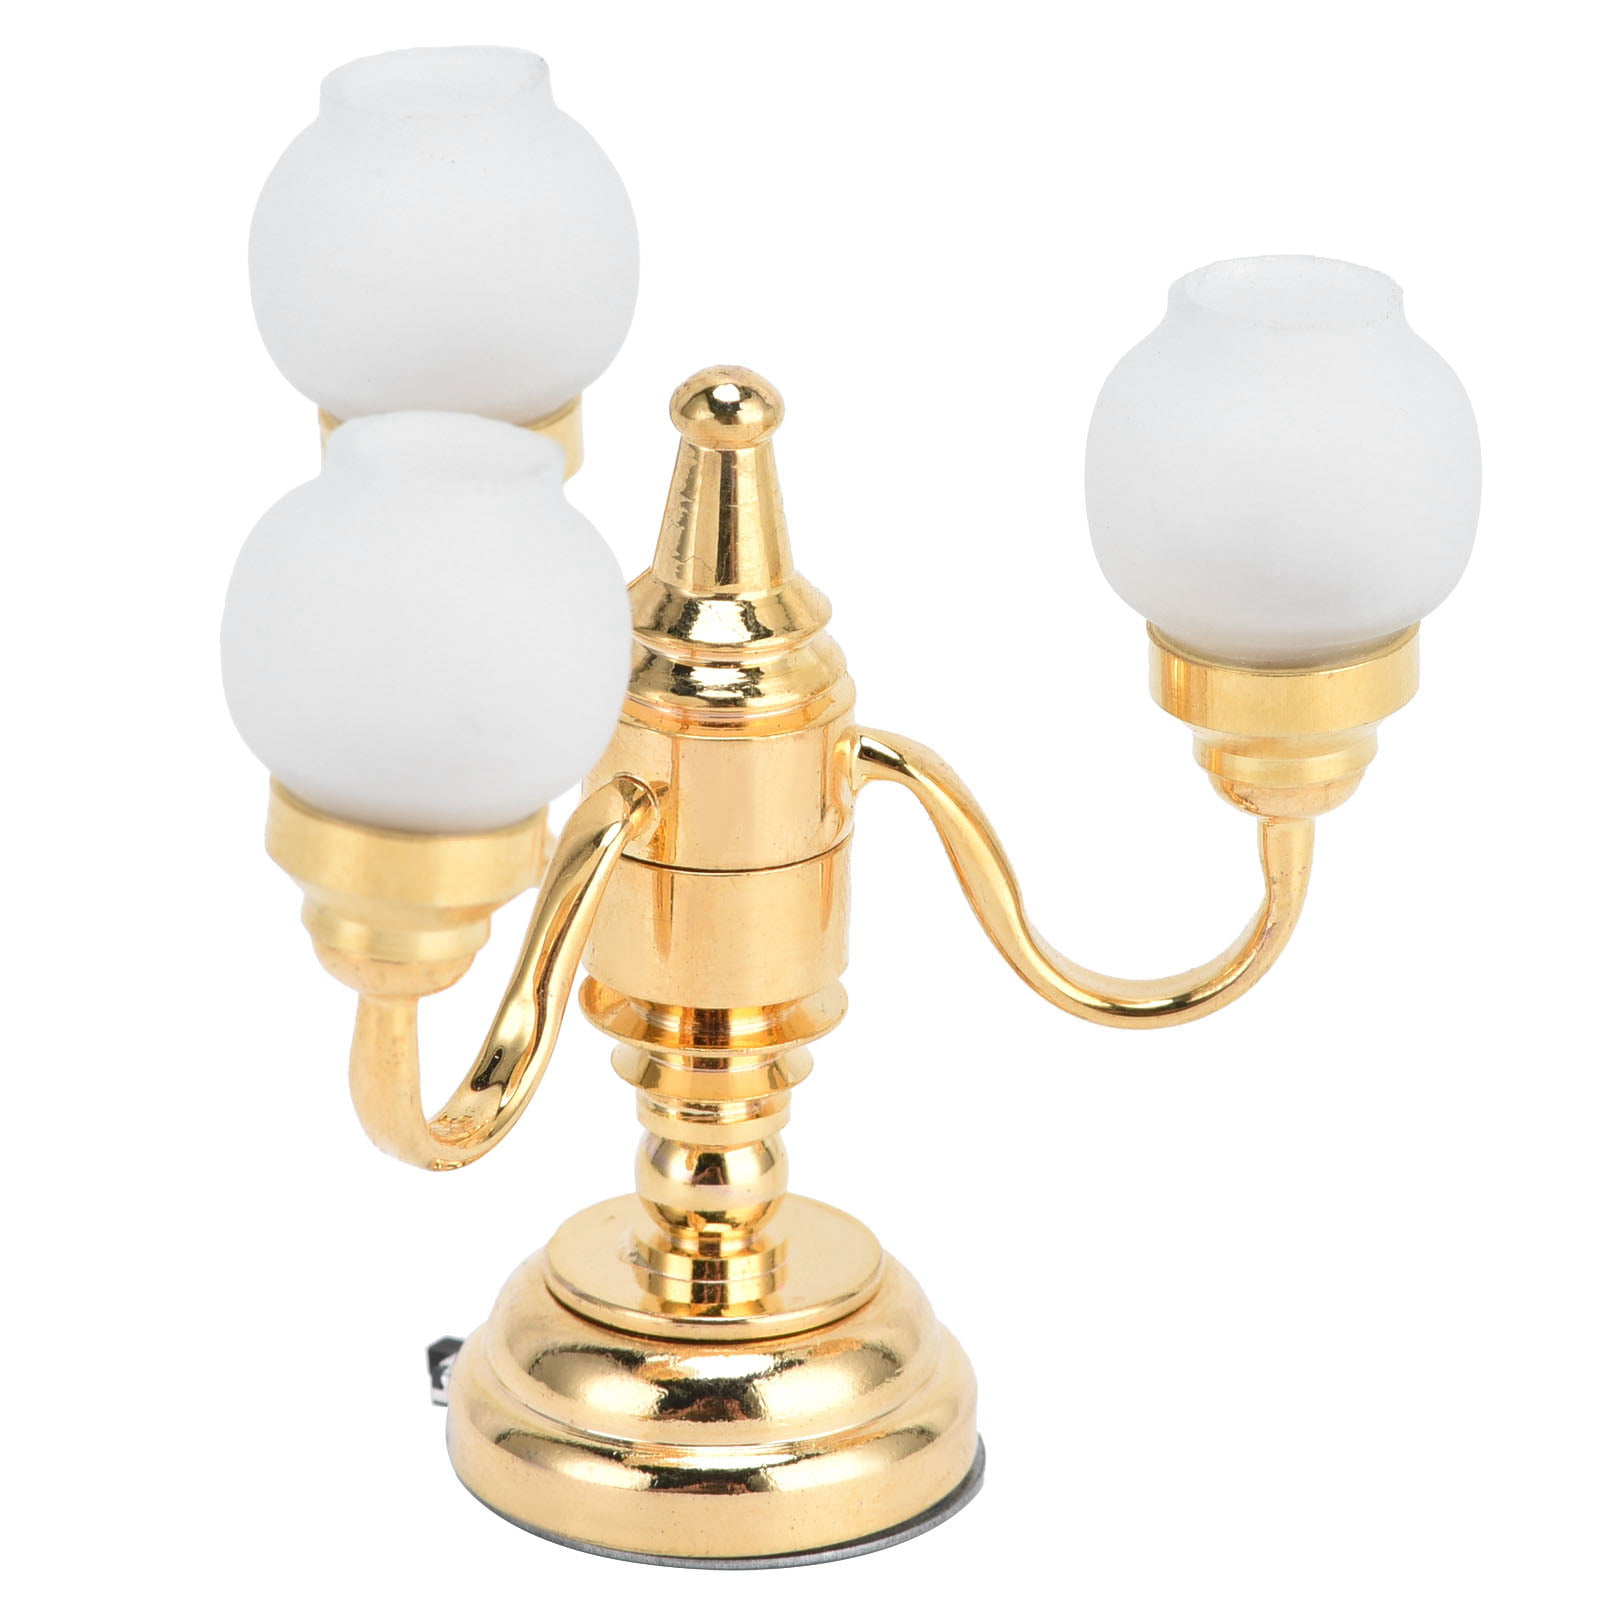 Miniature Dollhouse Gold Desk Lamp Dollhouse Light Dollhouse Lamp LED Light with onoff switch 1:12 scale dollhouse miniatures